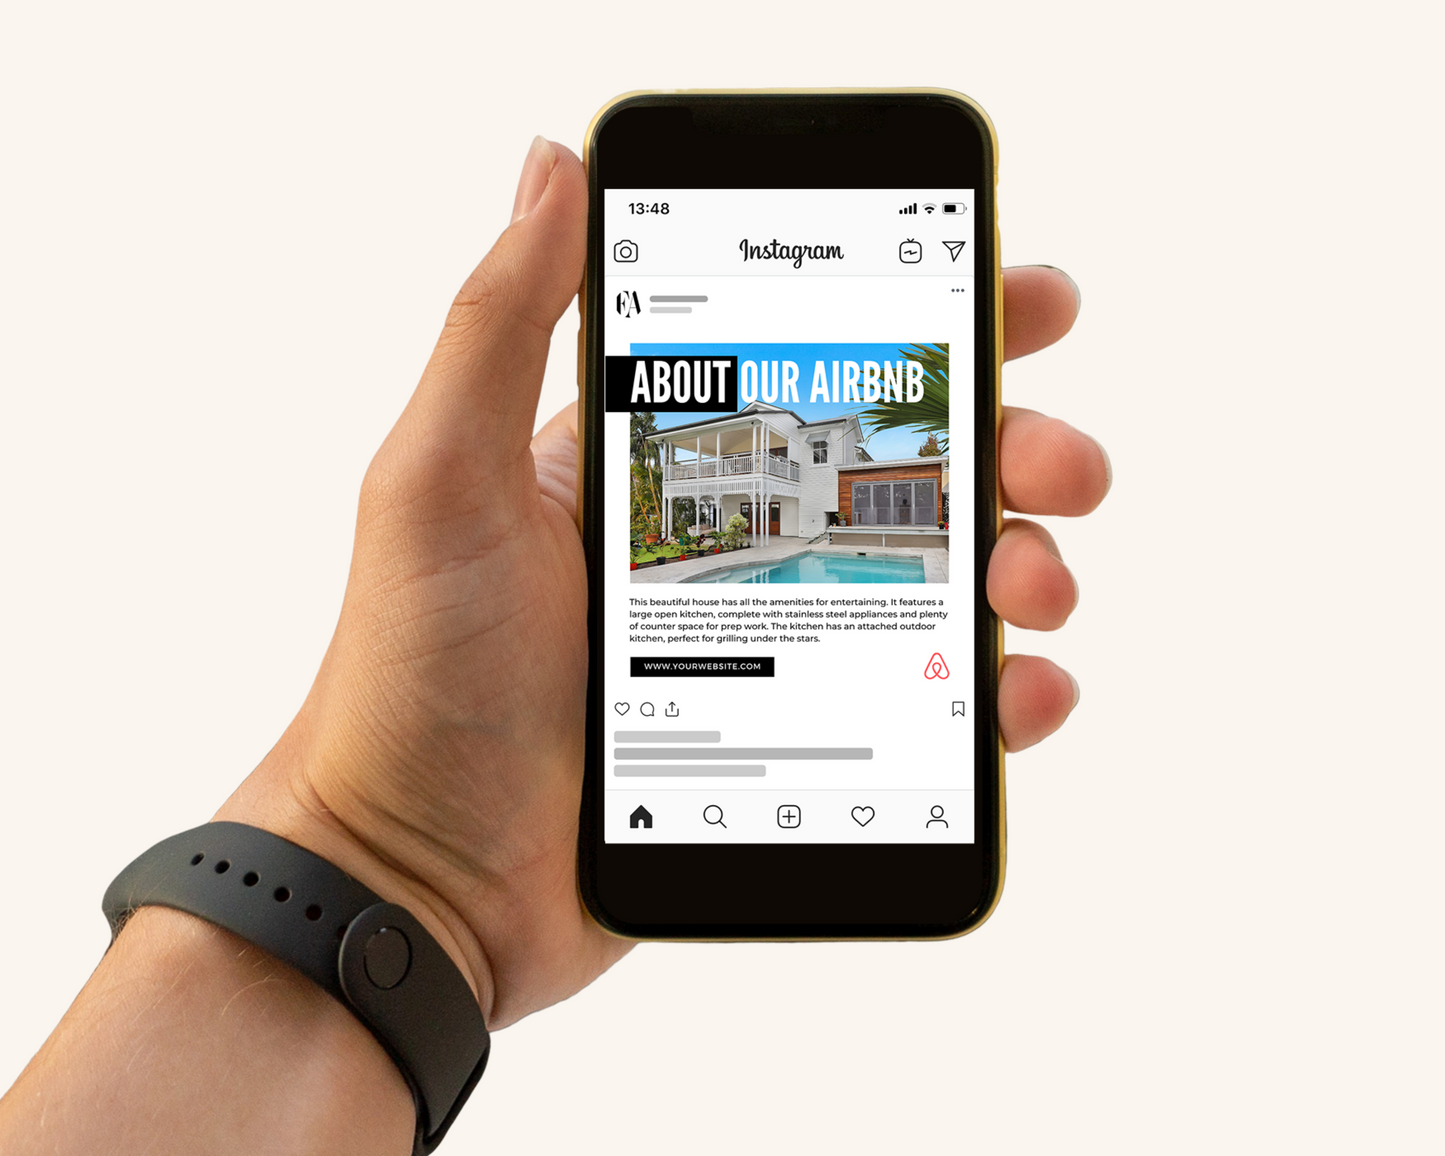 Real Estate Template – Minimal Airbnb Social Media Posts 1